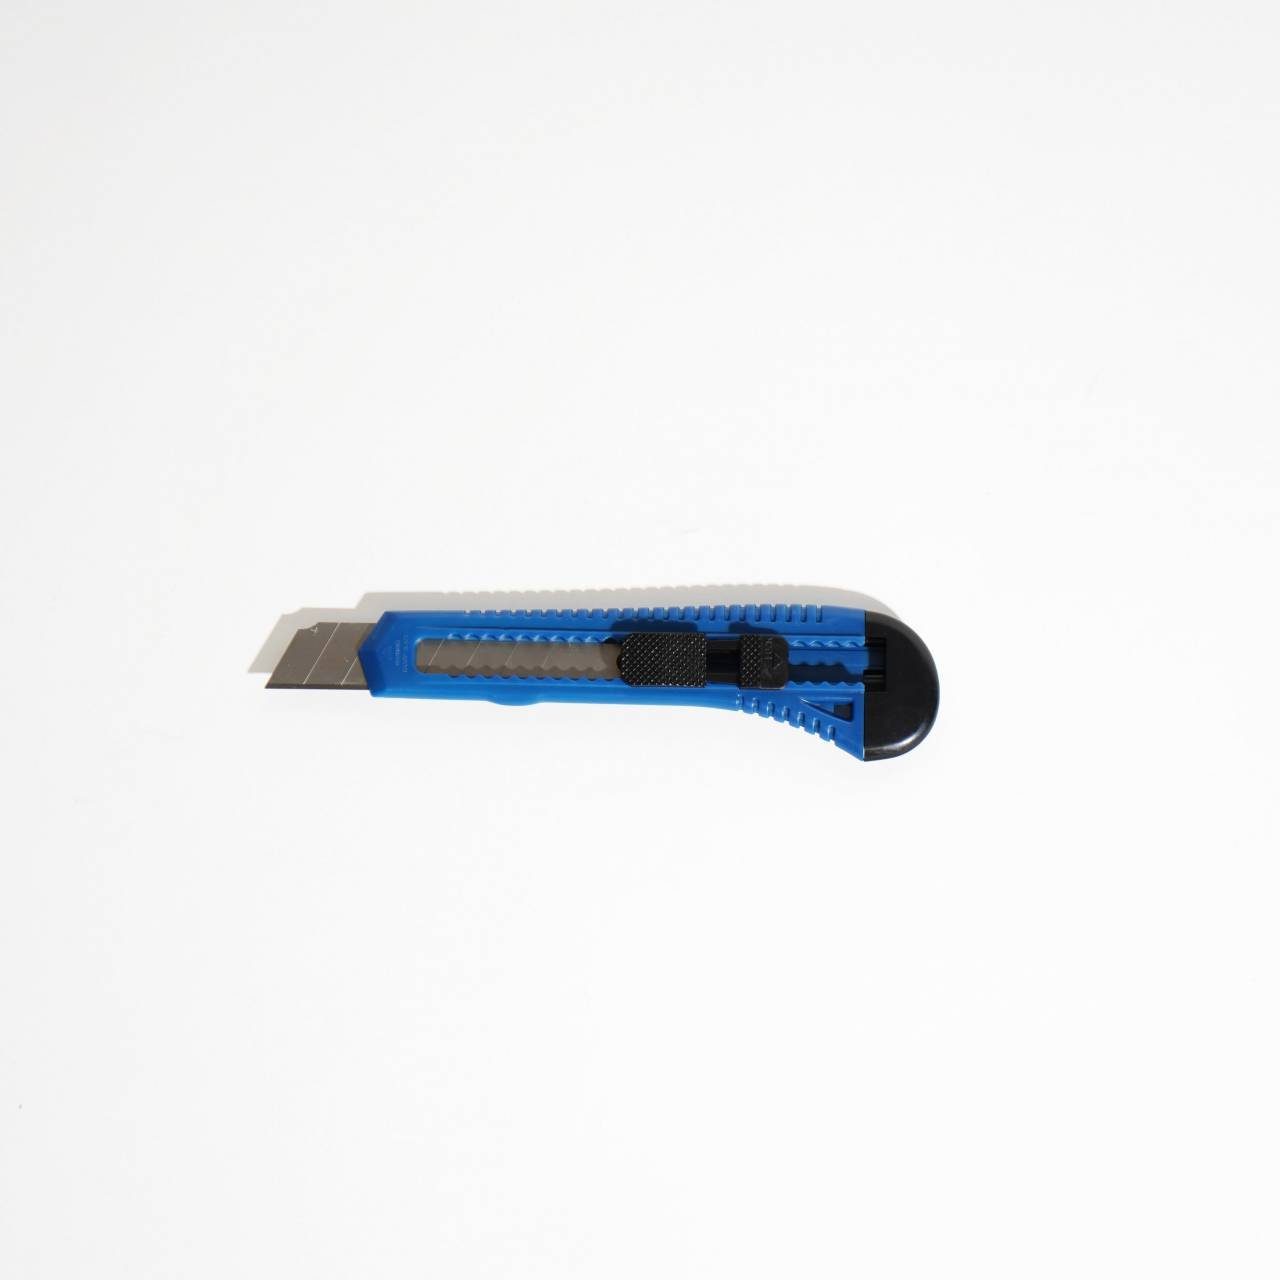 PROVISTON Cuttermesser Cuttermesser, Kunststoff, 18 mm, Teppichmesser